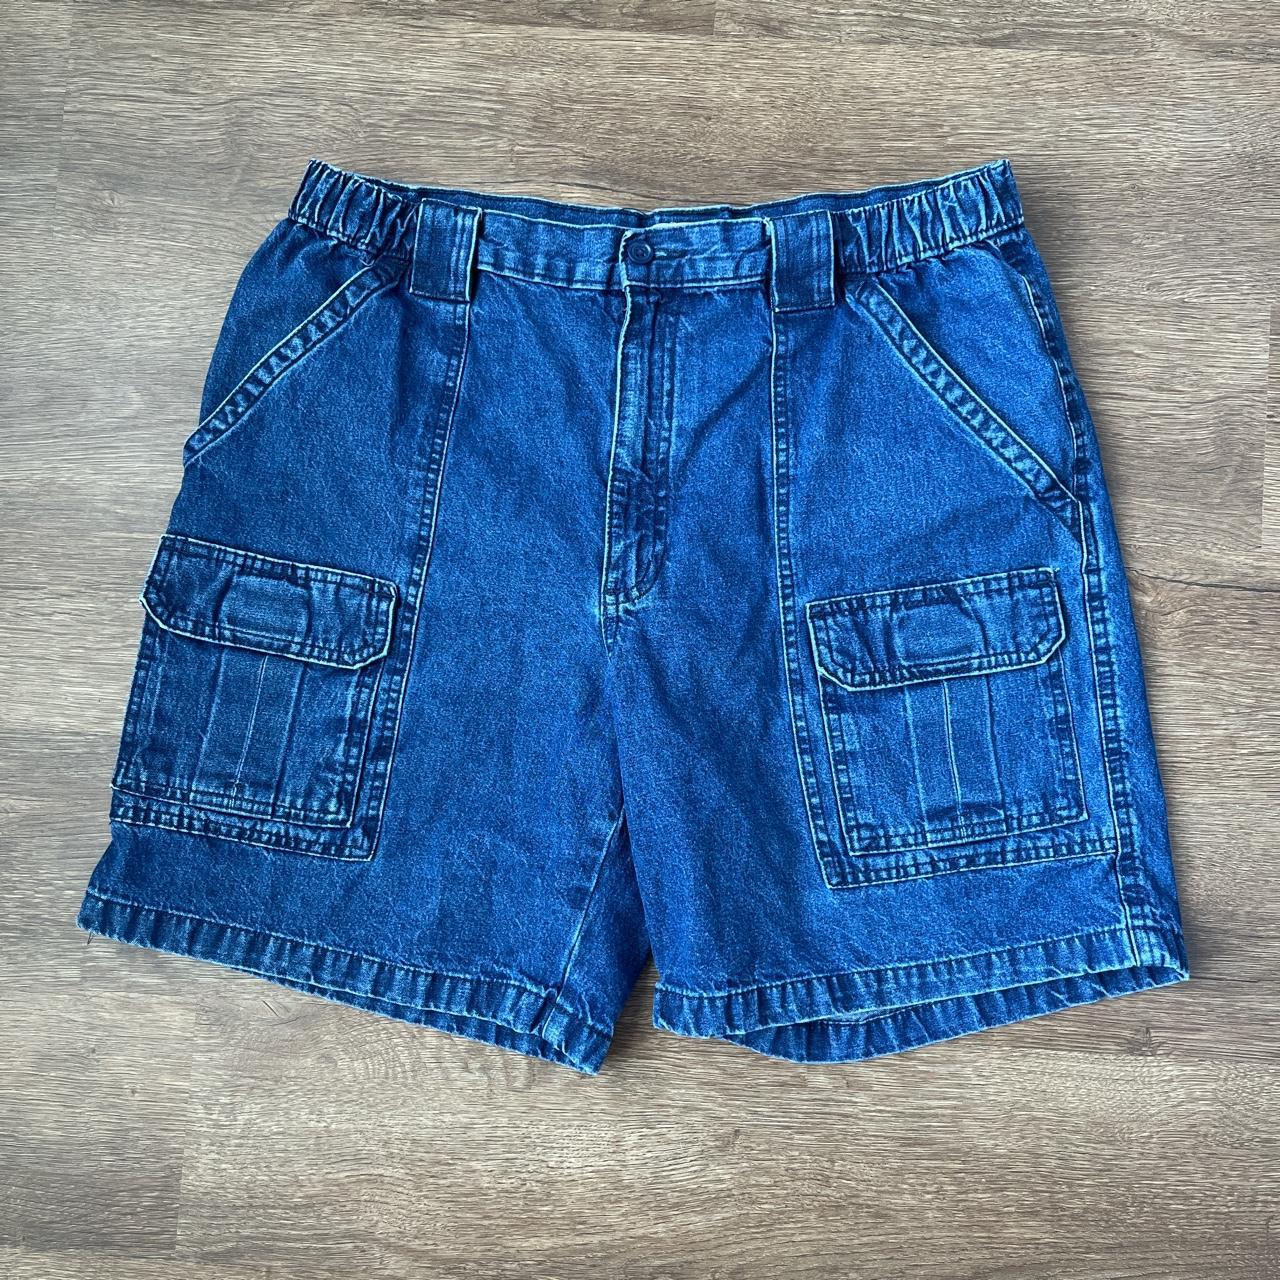 Vintage Savane Cargo Jean Shorts Excellent... - Depop